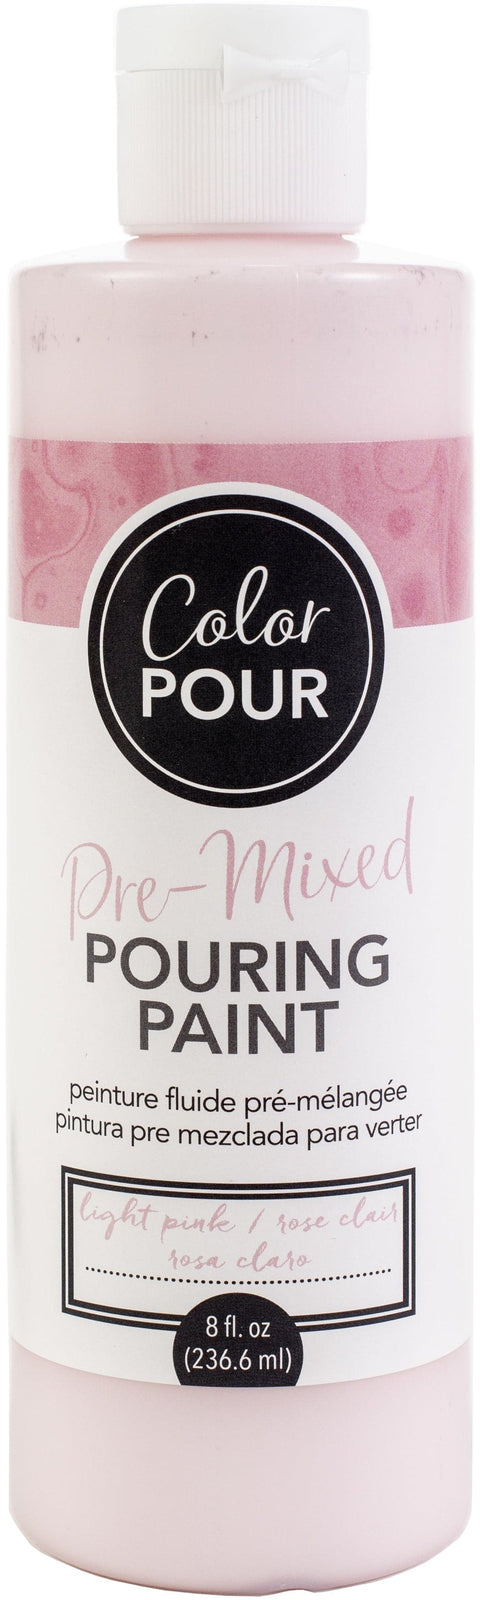 American Crafts Color Pour Pre-Mixed Paint 8oz-Light Pink